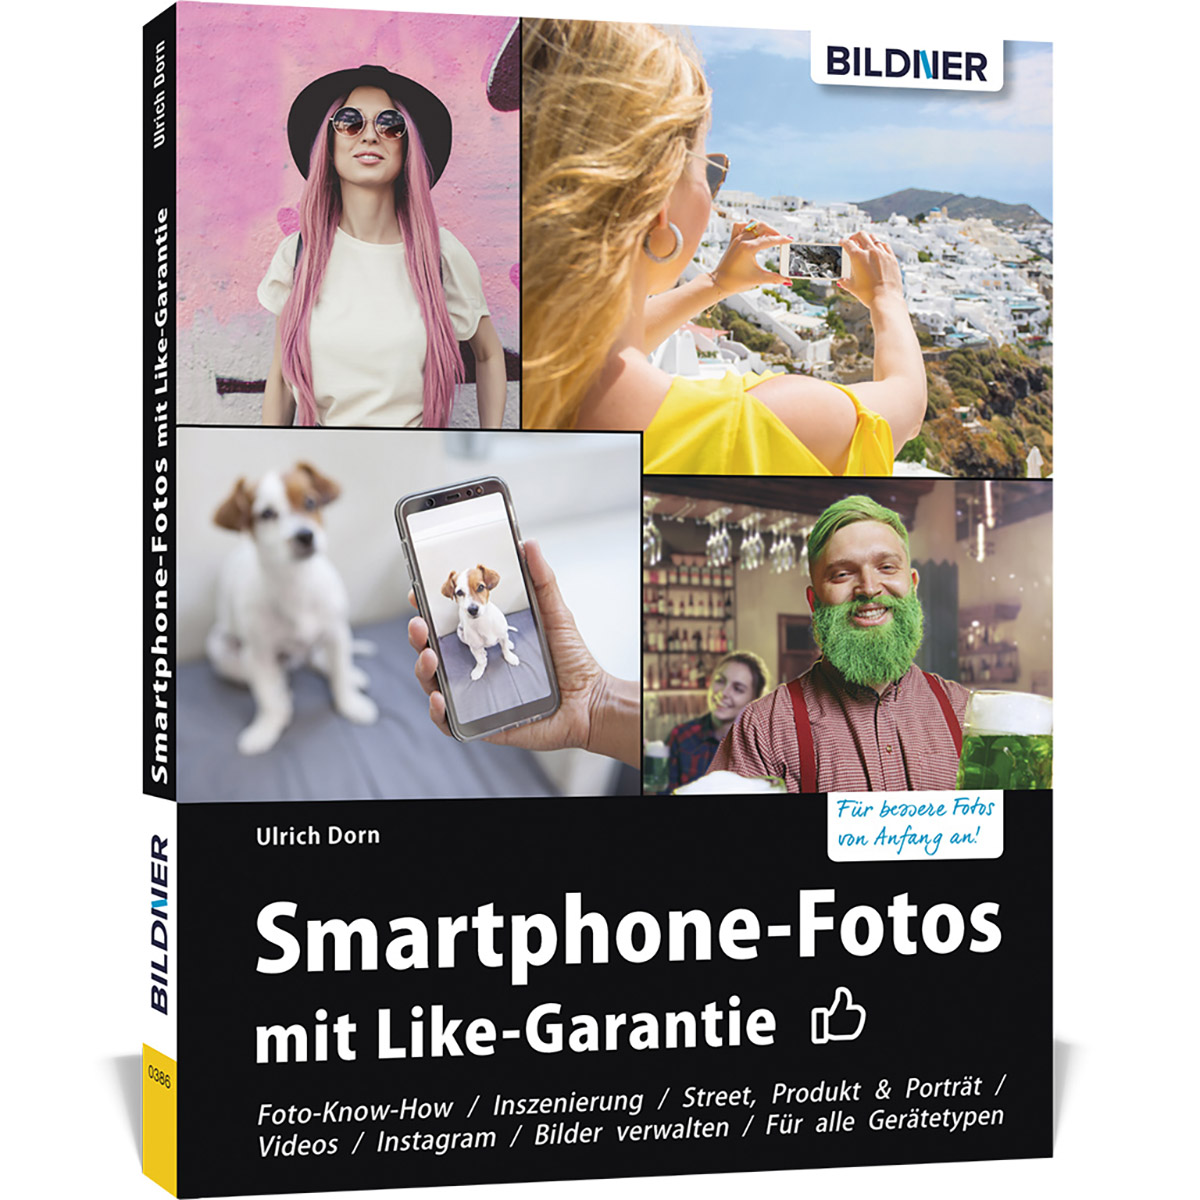 Smartphone-Fotos Like-Garantie mit